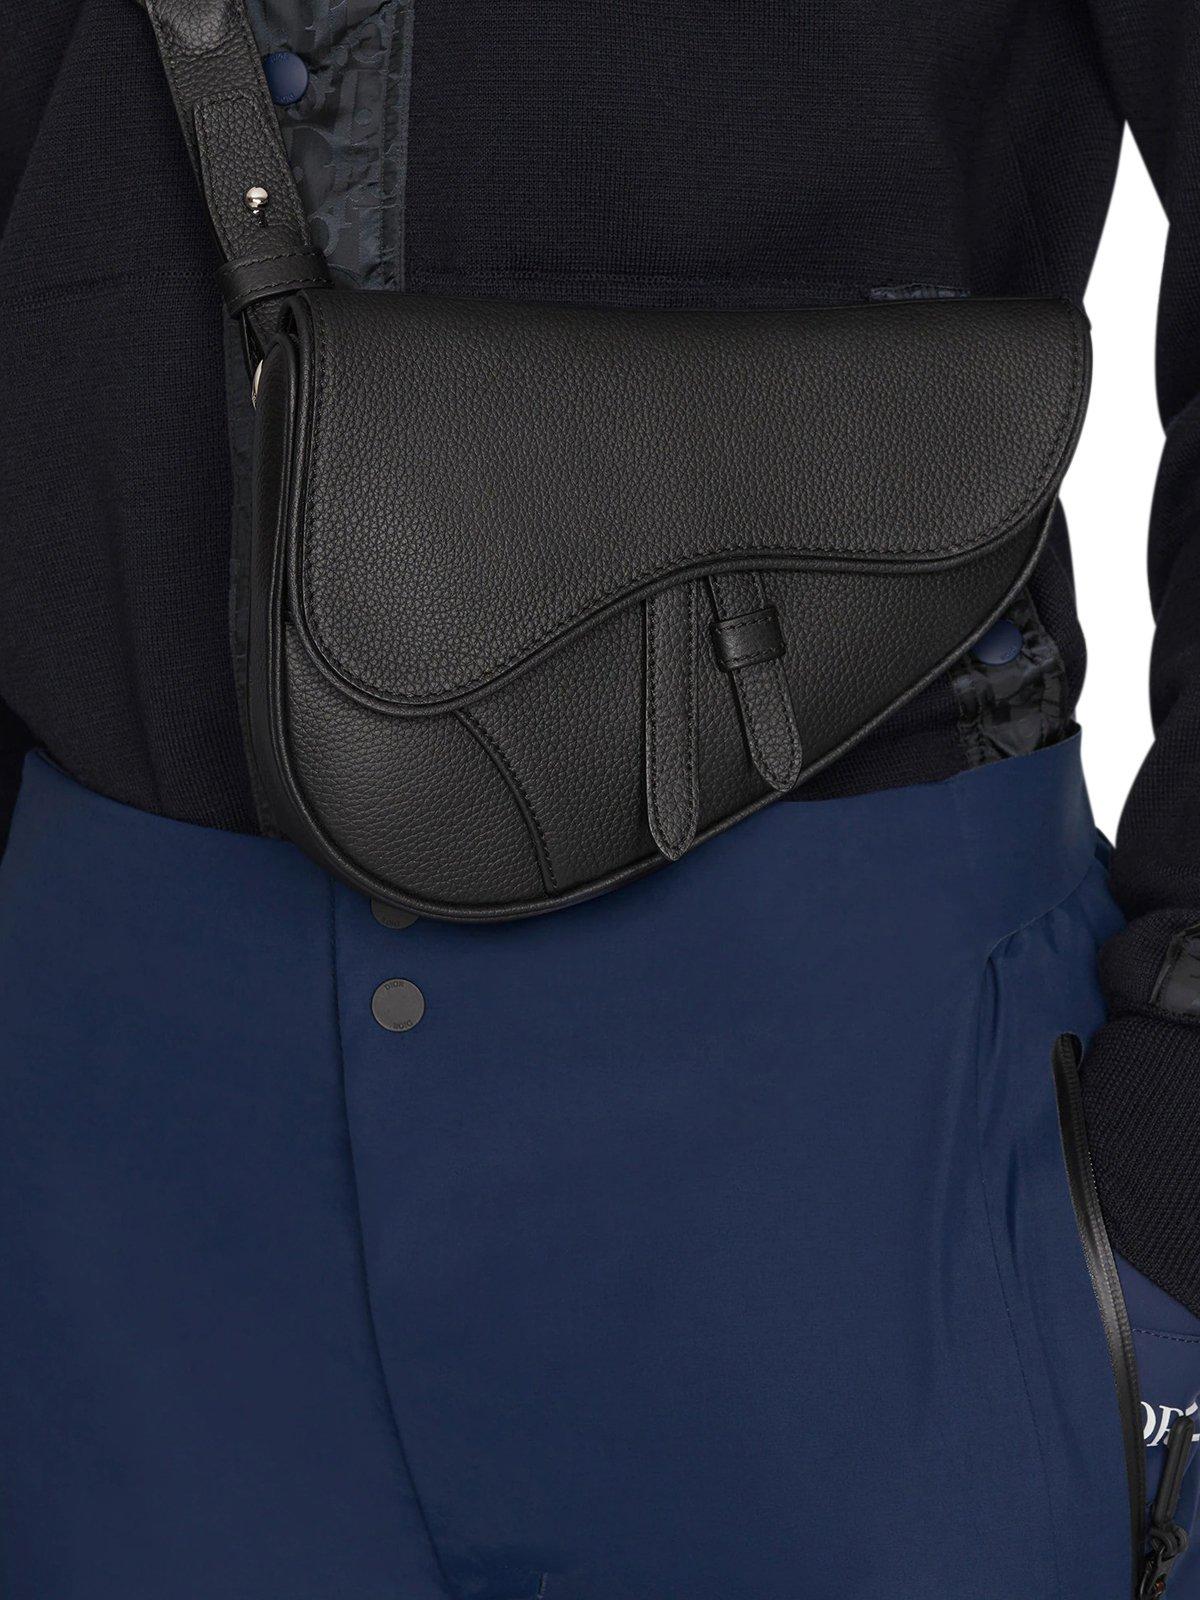 Dior Saddle Bag Mini  Bags, Dior mini bag, Dior saddle bag